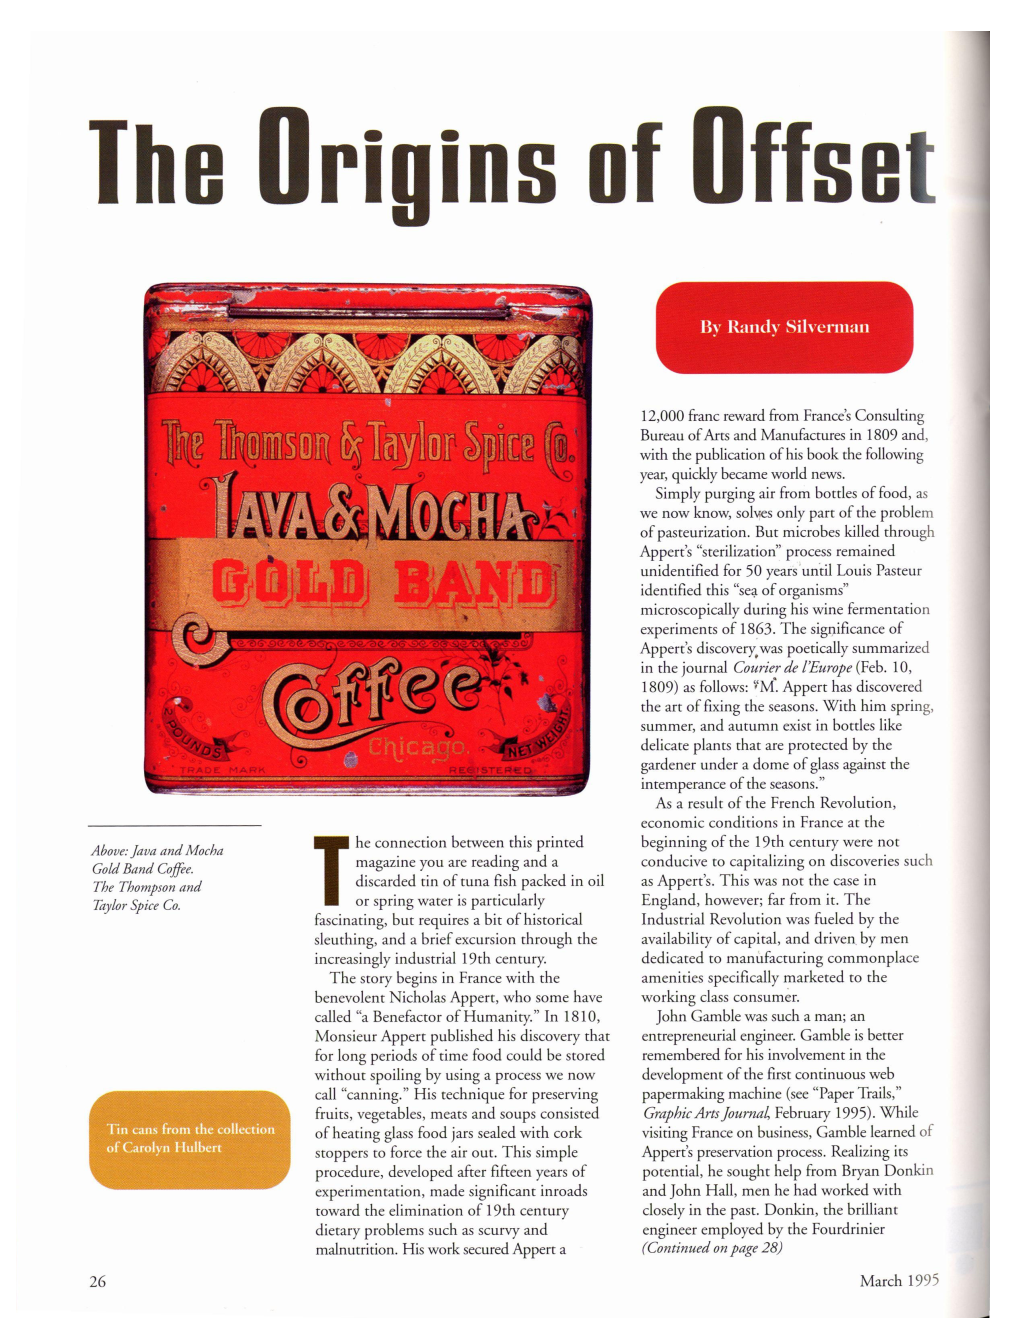 Origins of Offset